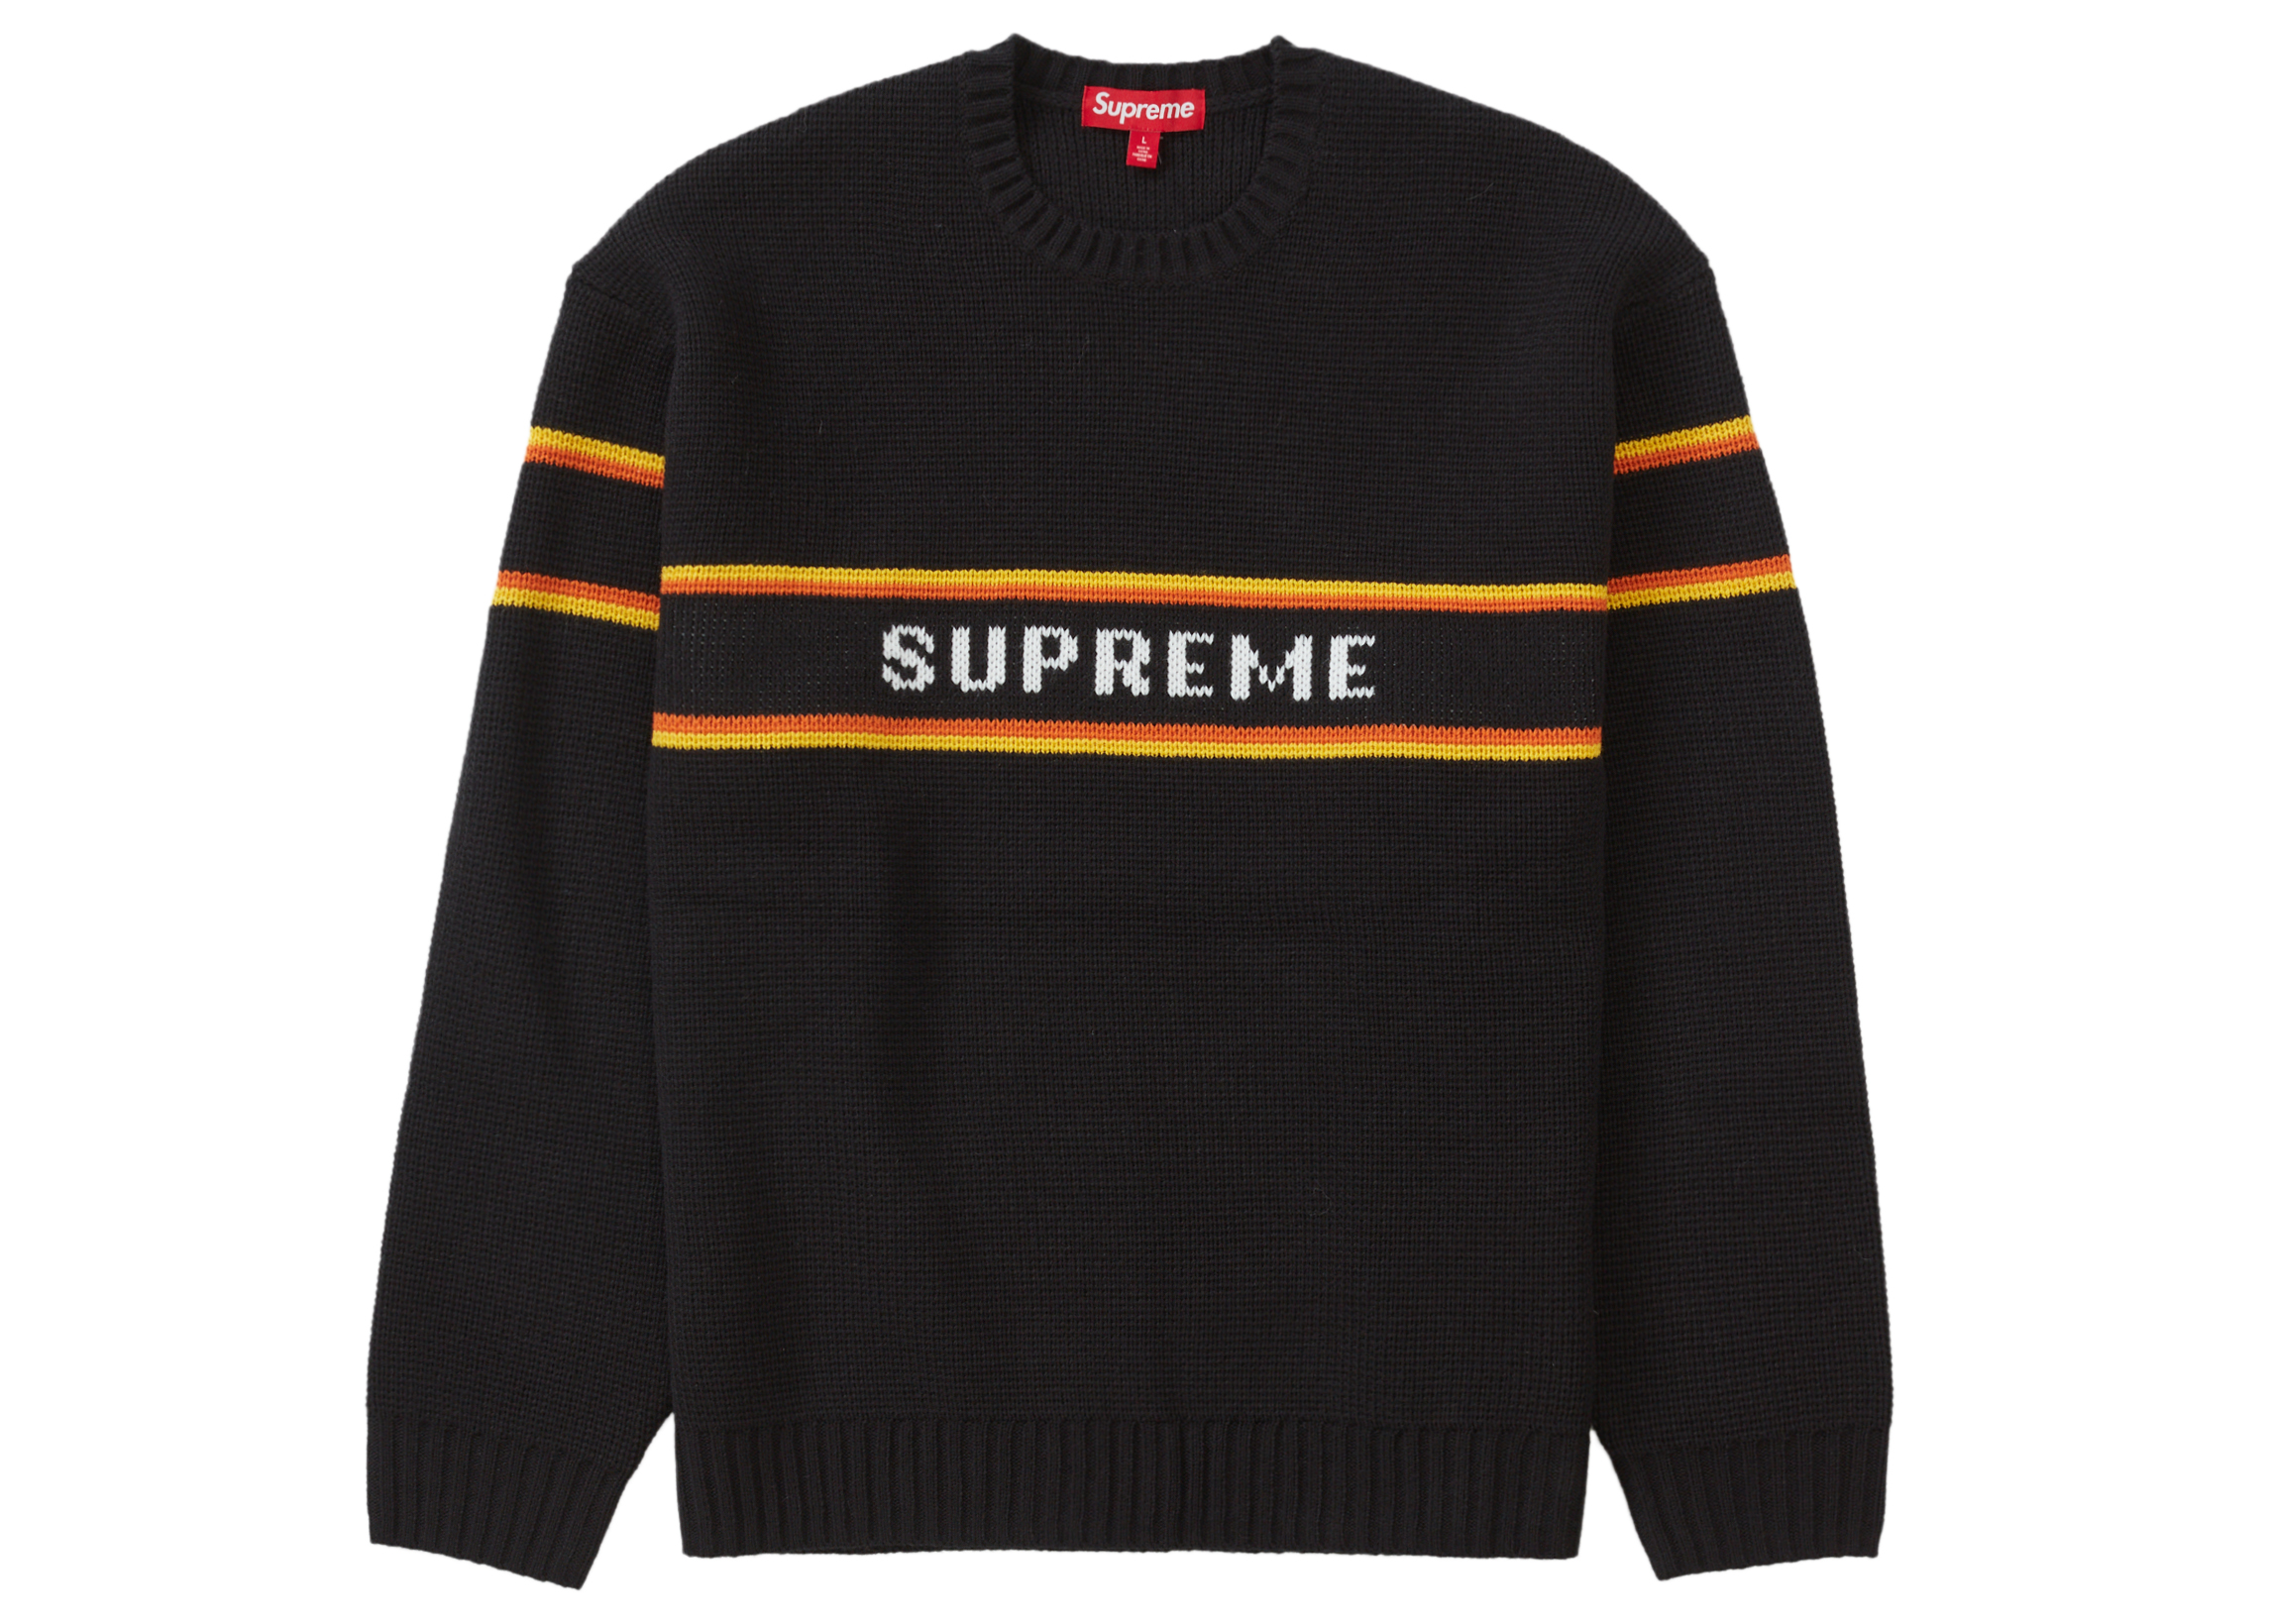 Supreme Chest Stripe Sweater21000円で購入したいです